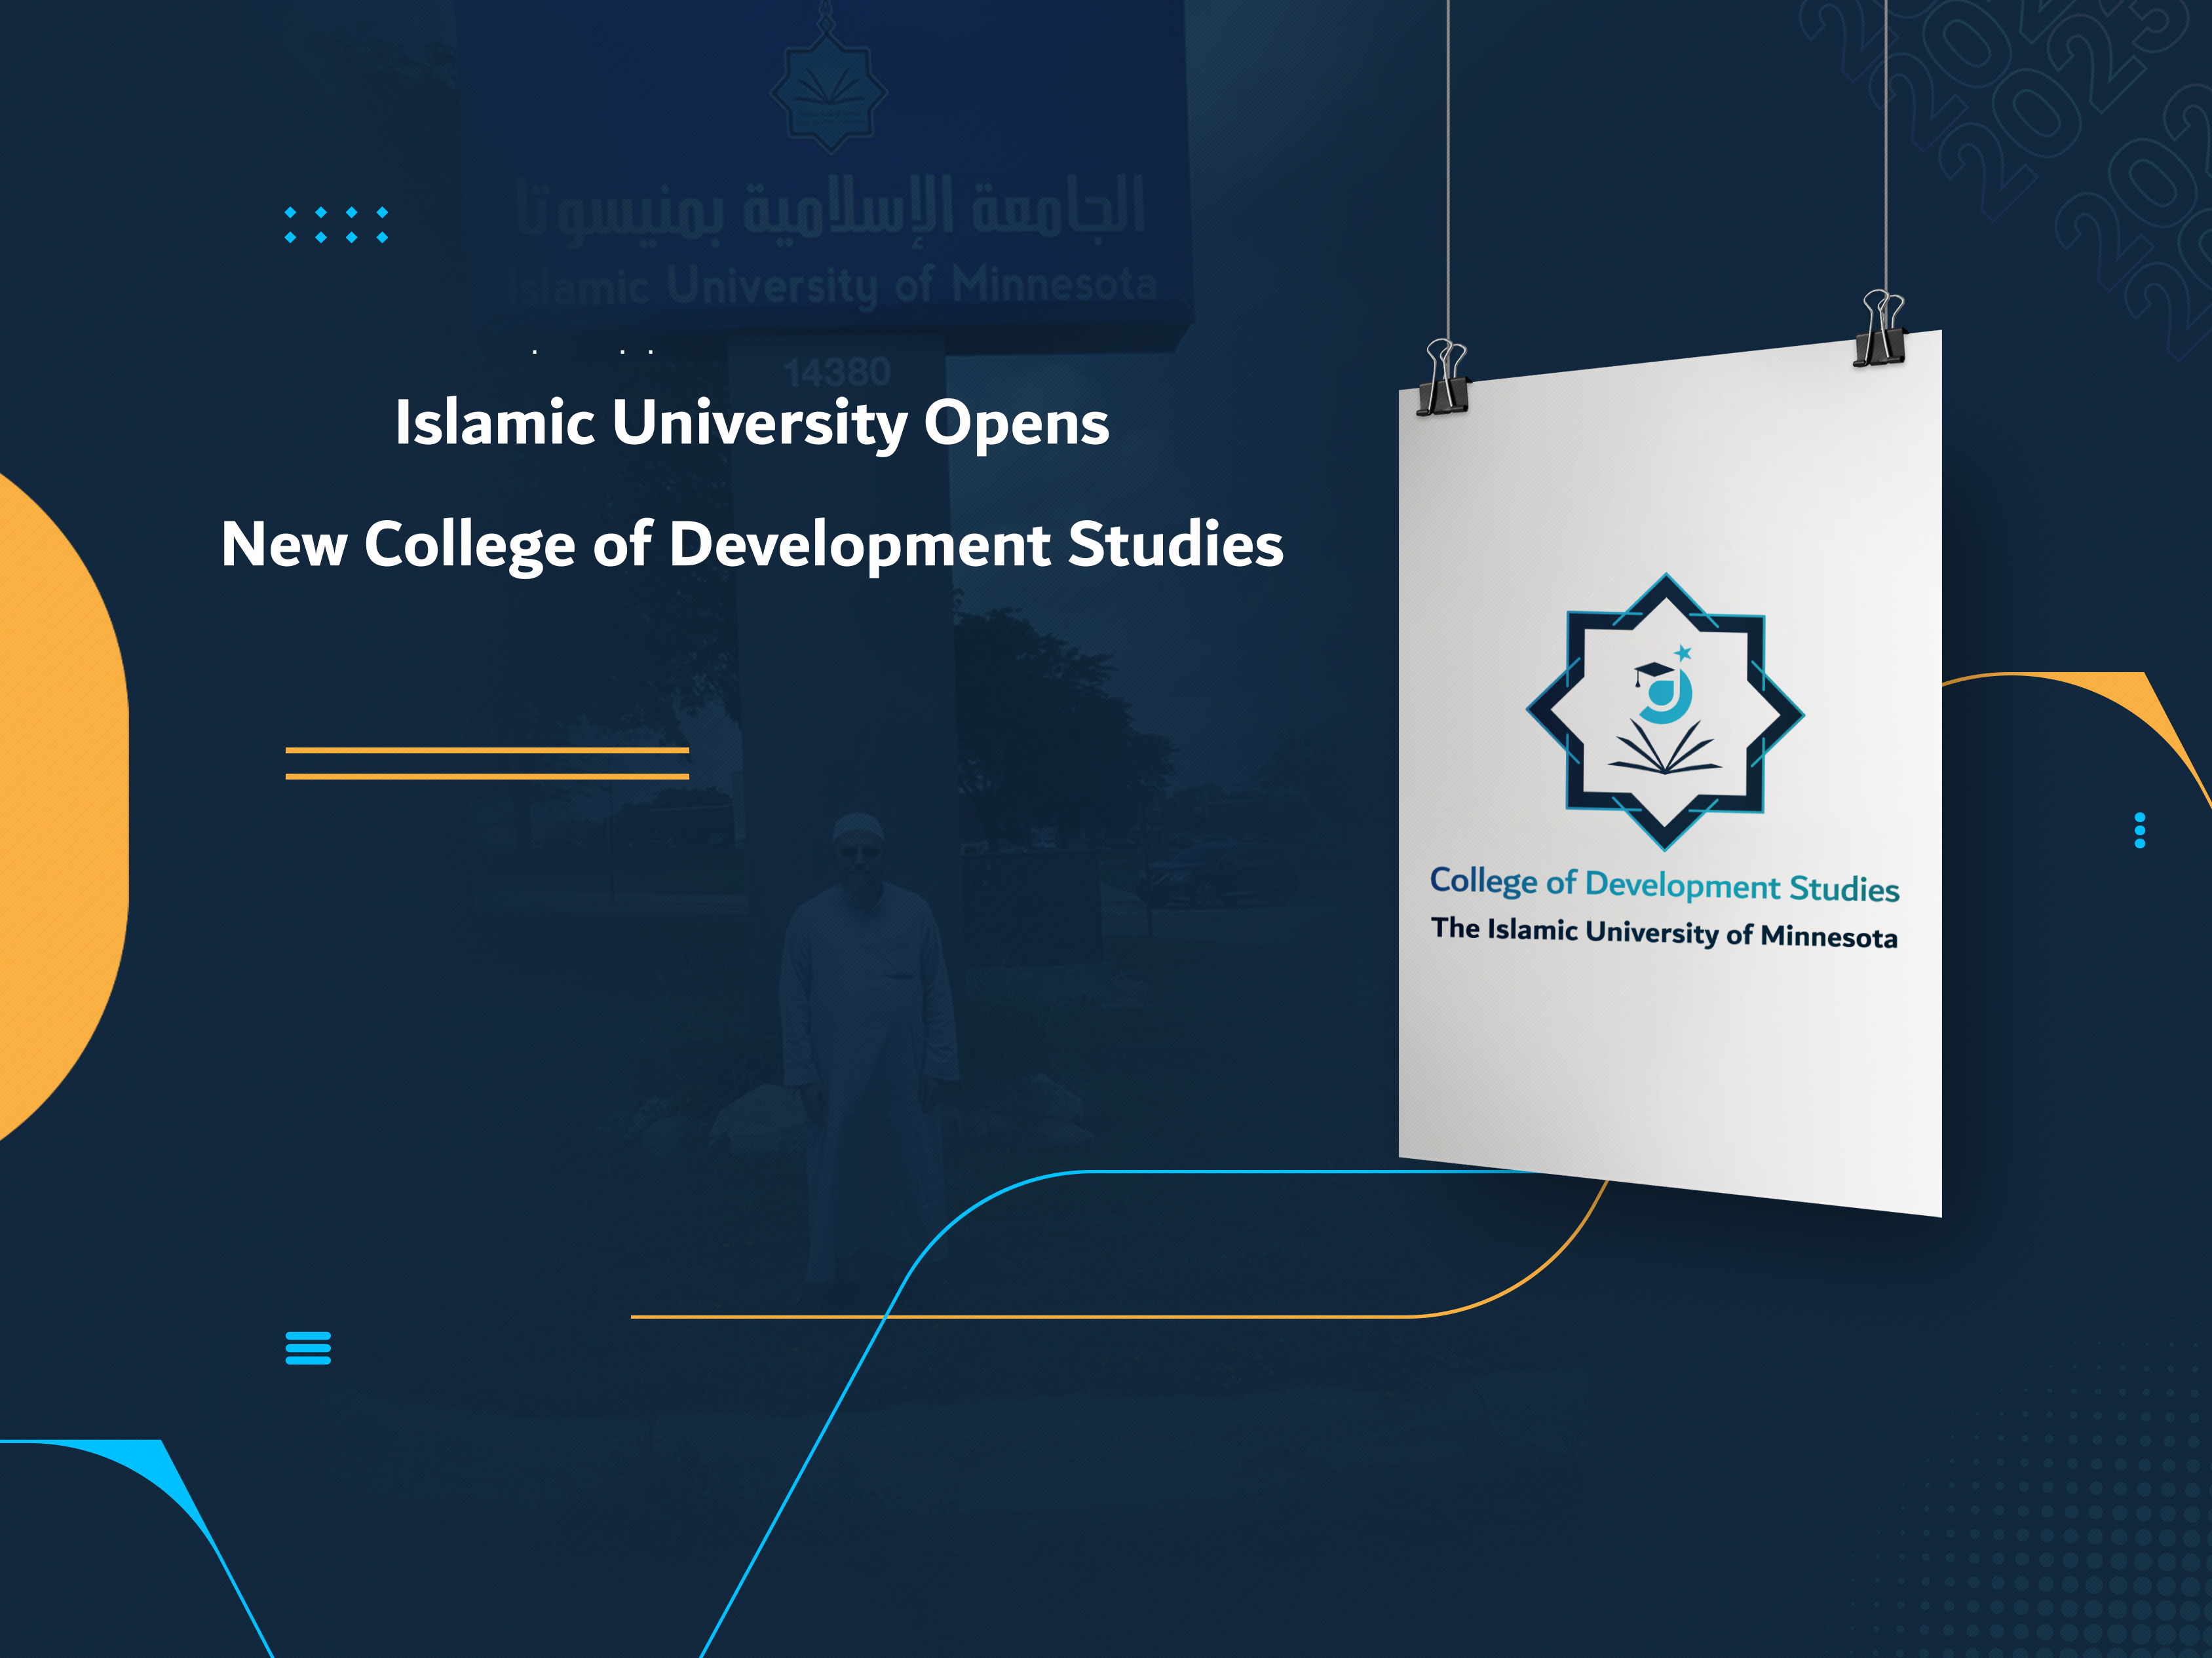 Islamic University Opens New College of Development Studies